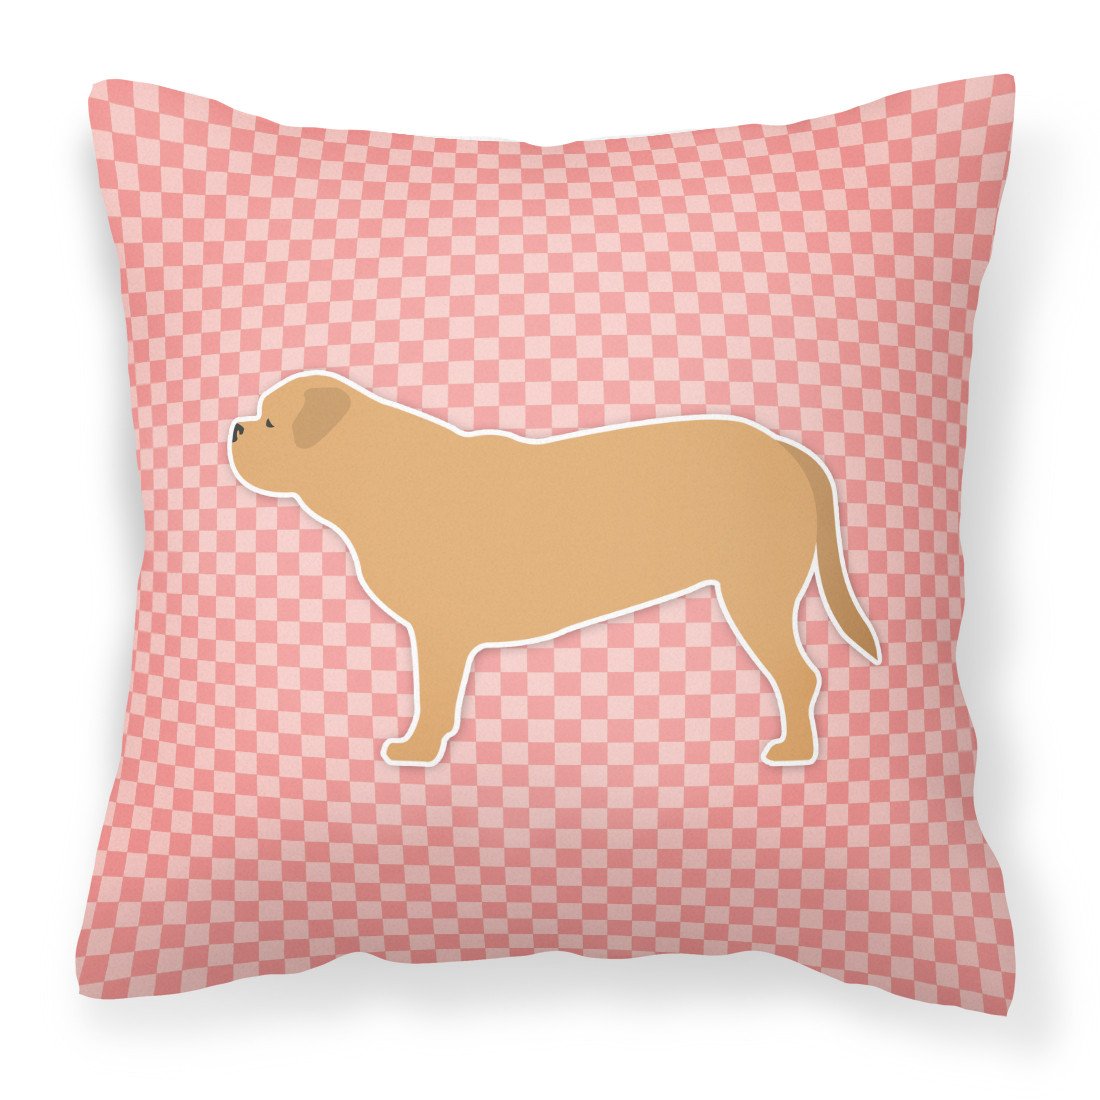 Dogue de Bordeaux Checkerboard Pink Fabric Decorative Pillow BB3670PW1818 by Caroline's Treasures